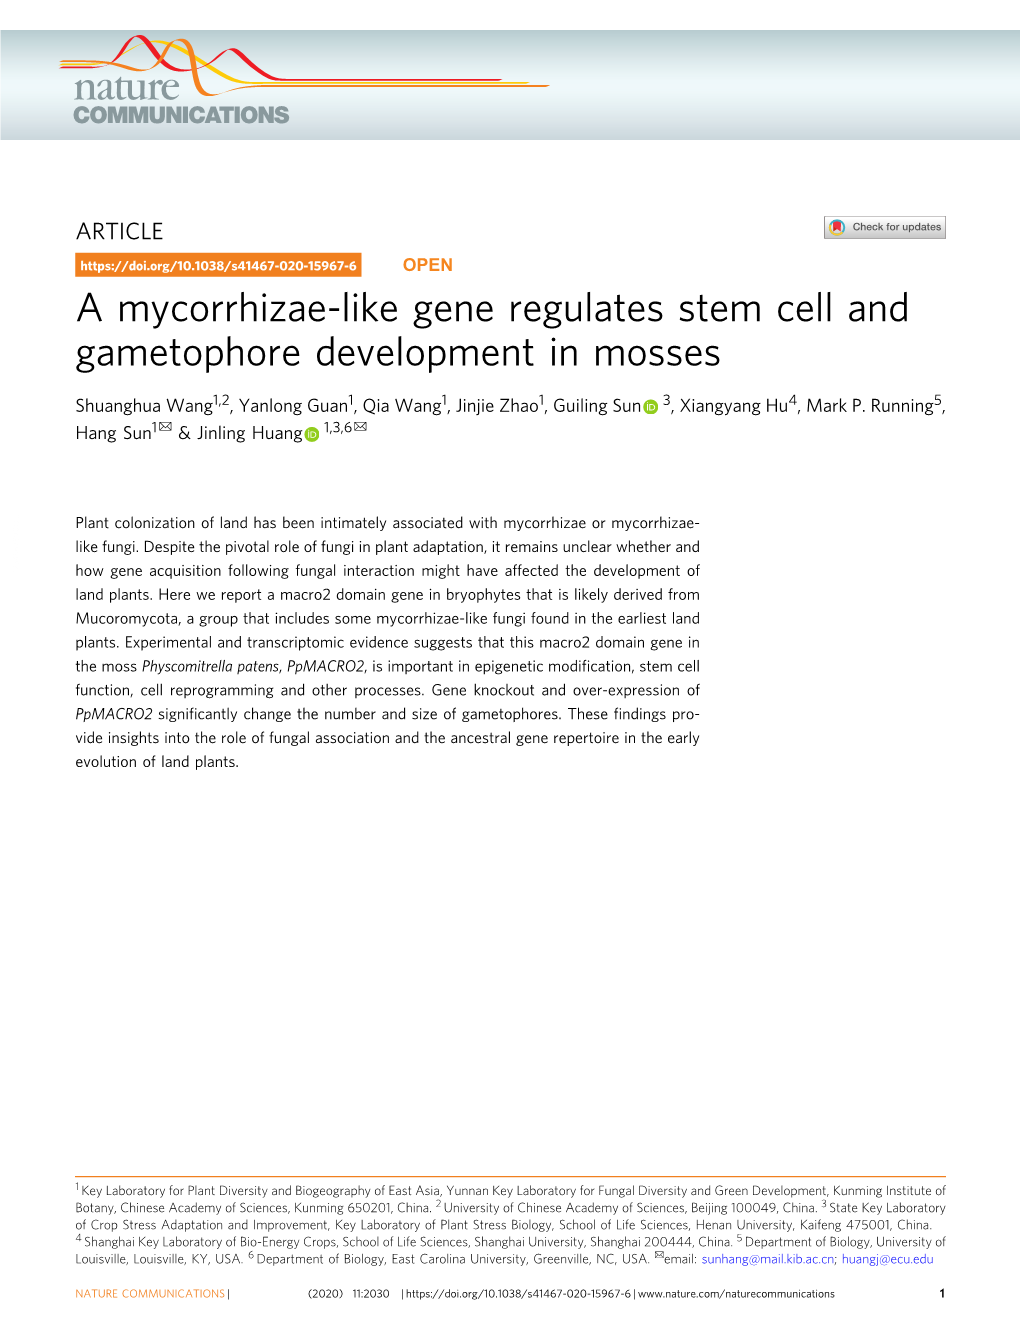 A Mycorrhizae-Like Gene Regulates Stem Cell and Gametophore Development in Mosses